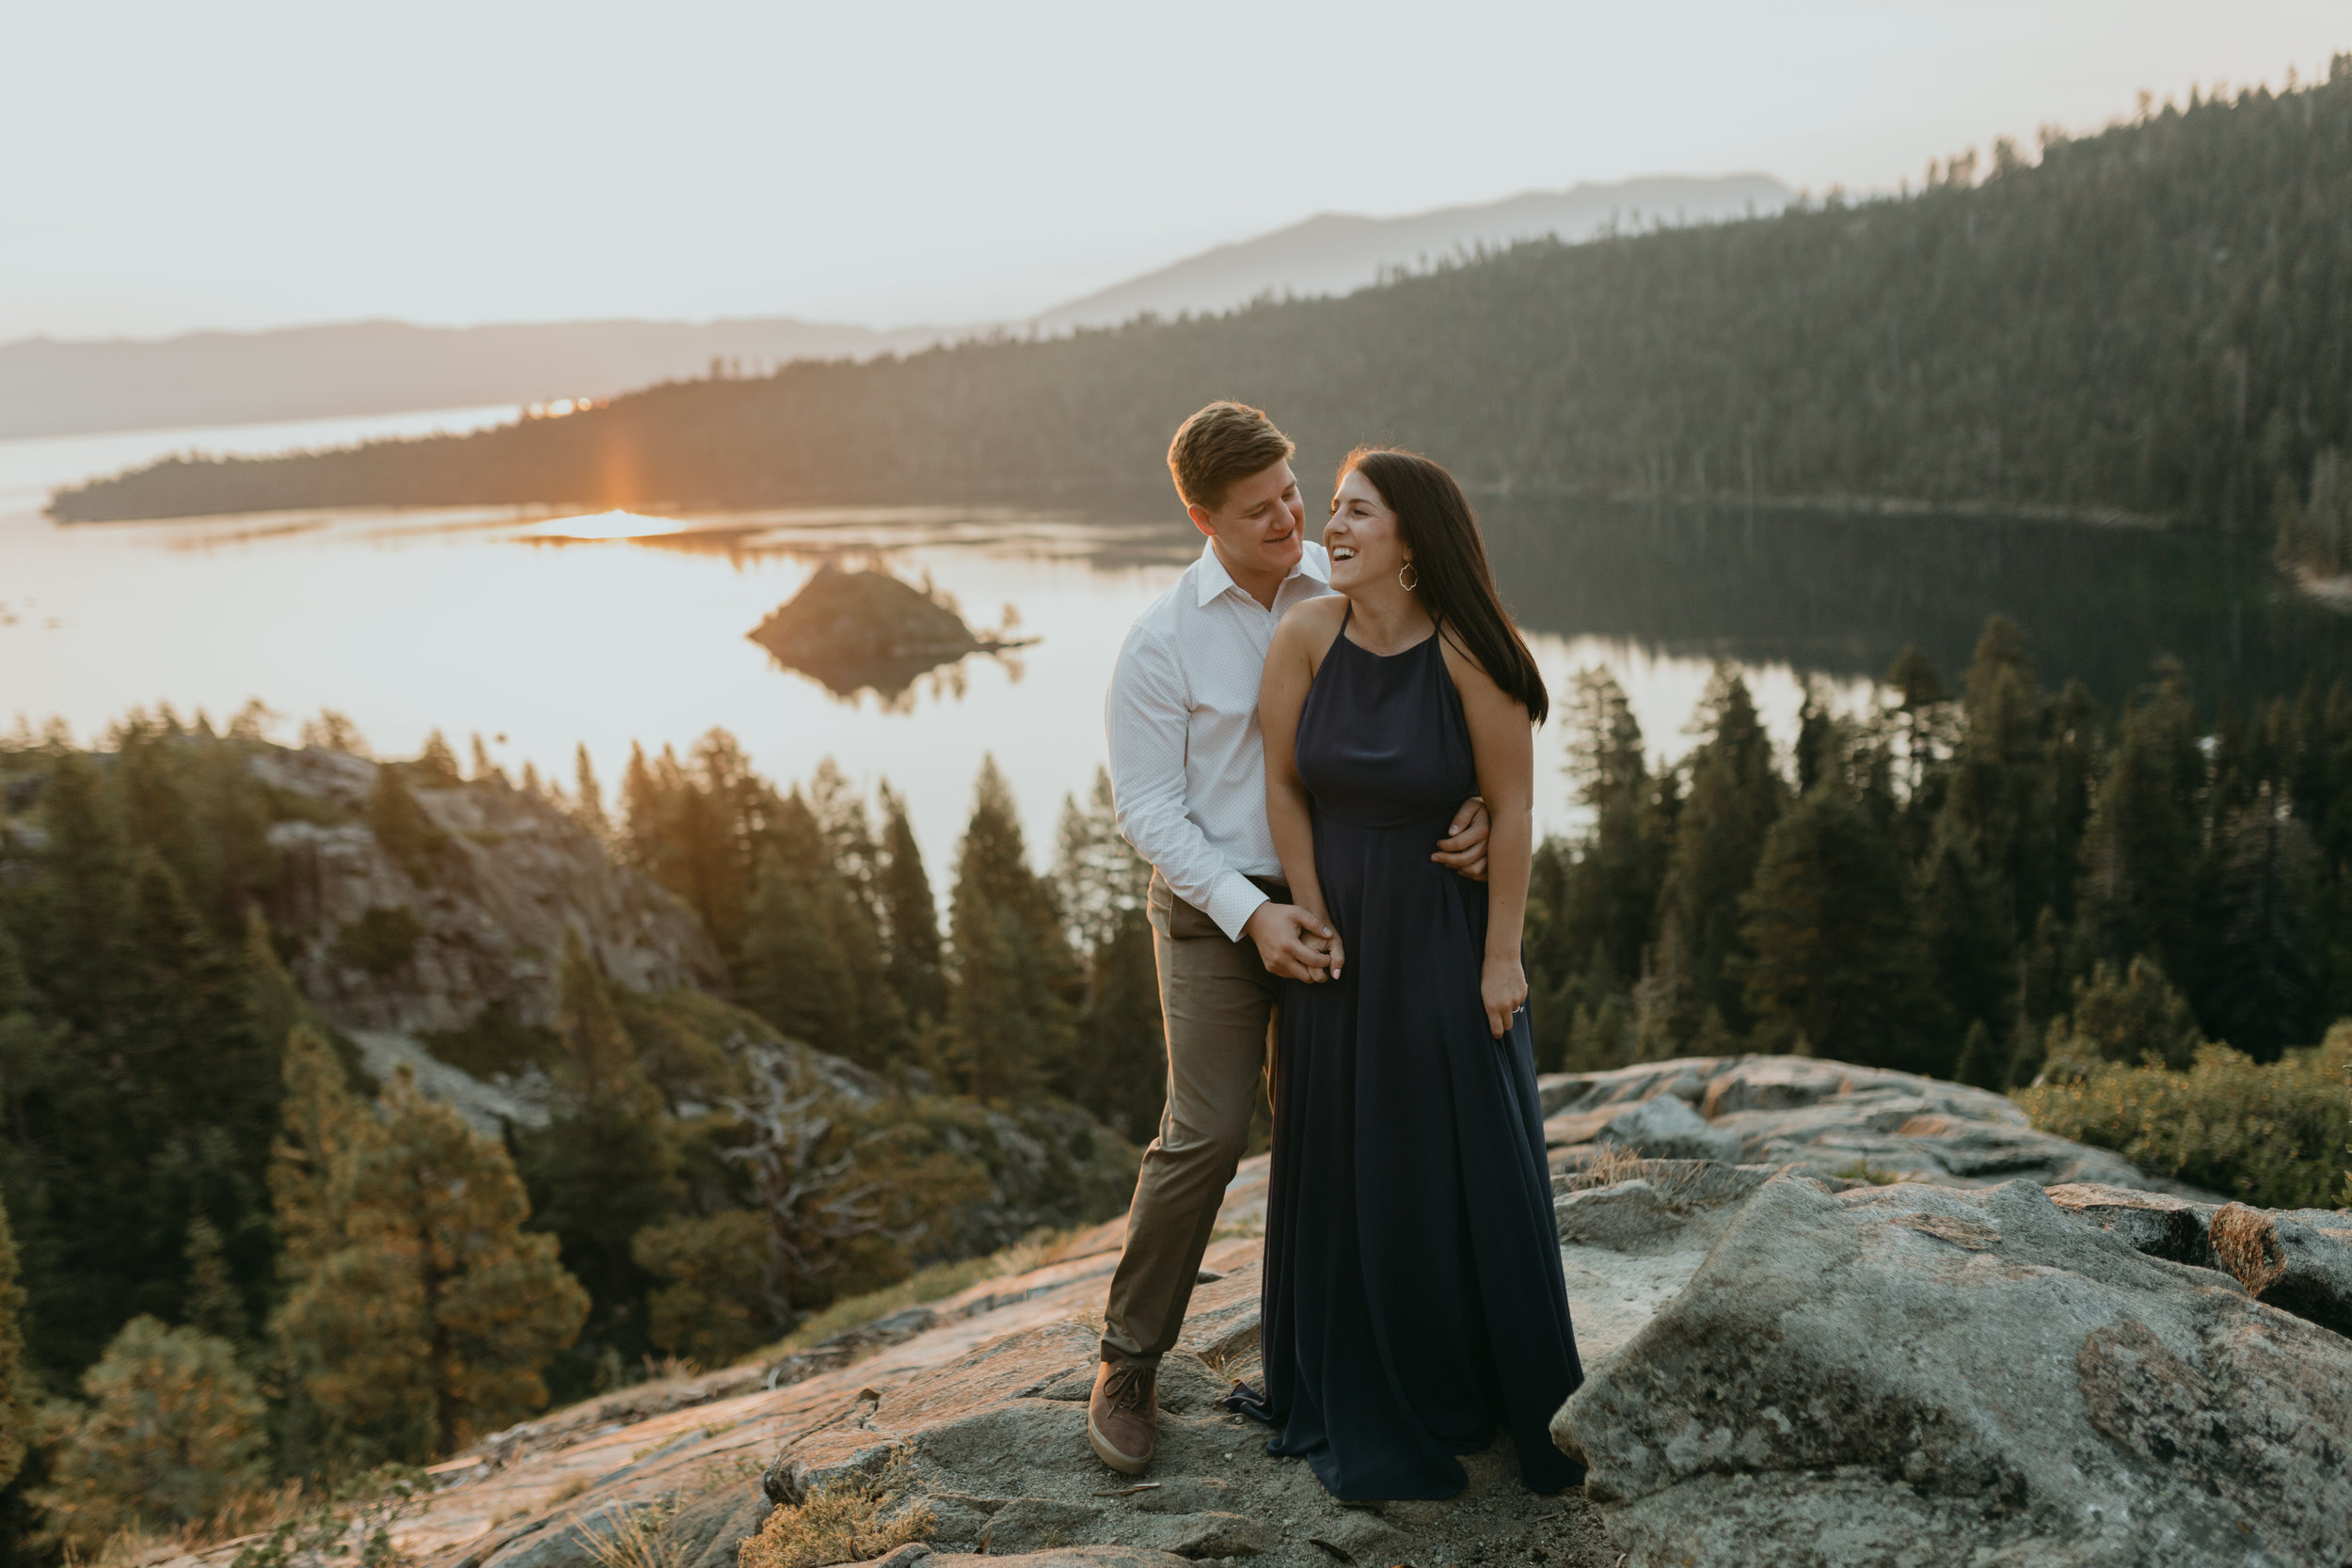 nicole-daacke-photography-lake-tahoe-sunrise-summer-adventure-engagement-photos-nevada-wedding-elopement-photographer-golden-emerald-bay-light-pine-trees-summer-vibe-fun-carefree-authentic-love-17.jpg